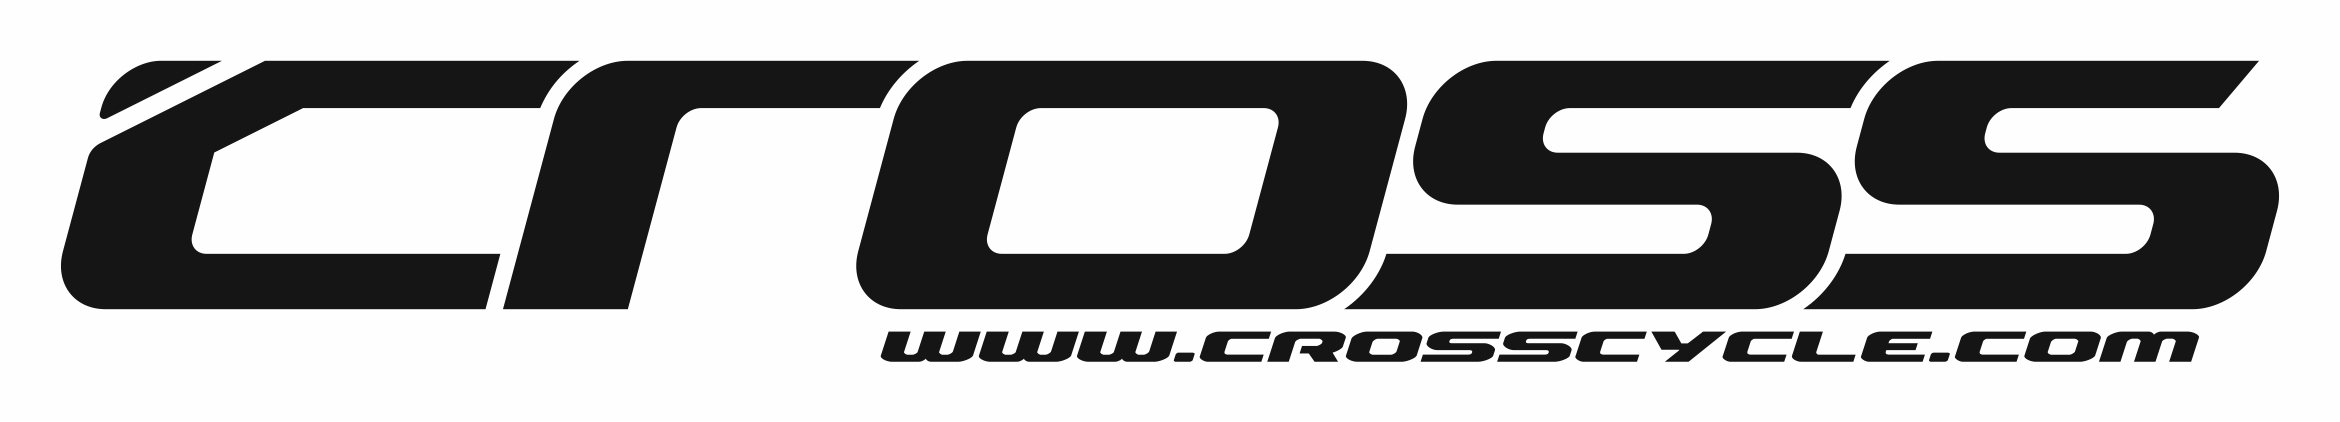 471-cross-logo-2016-with-website.jpg